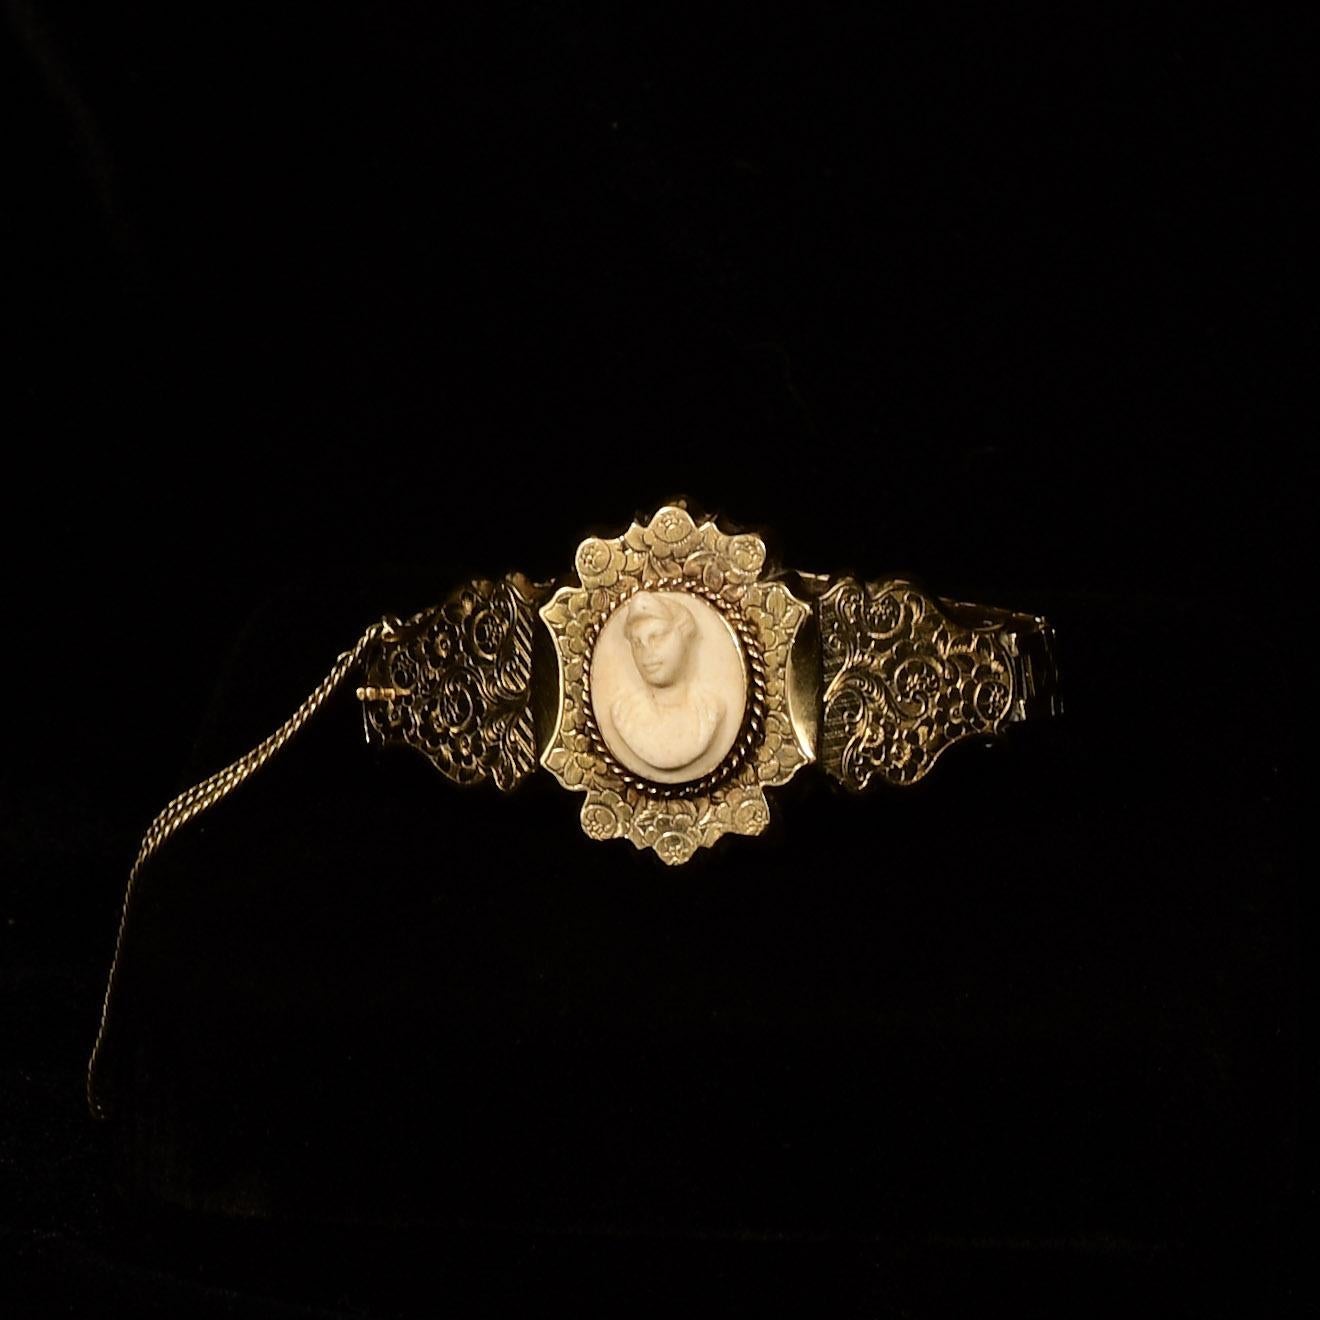 Antique Victorian Cameo Bracelet with Ornate Floral Engraving 14K Gold 2